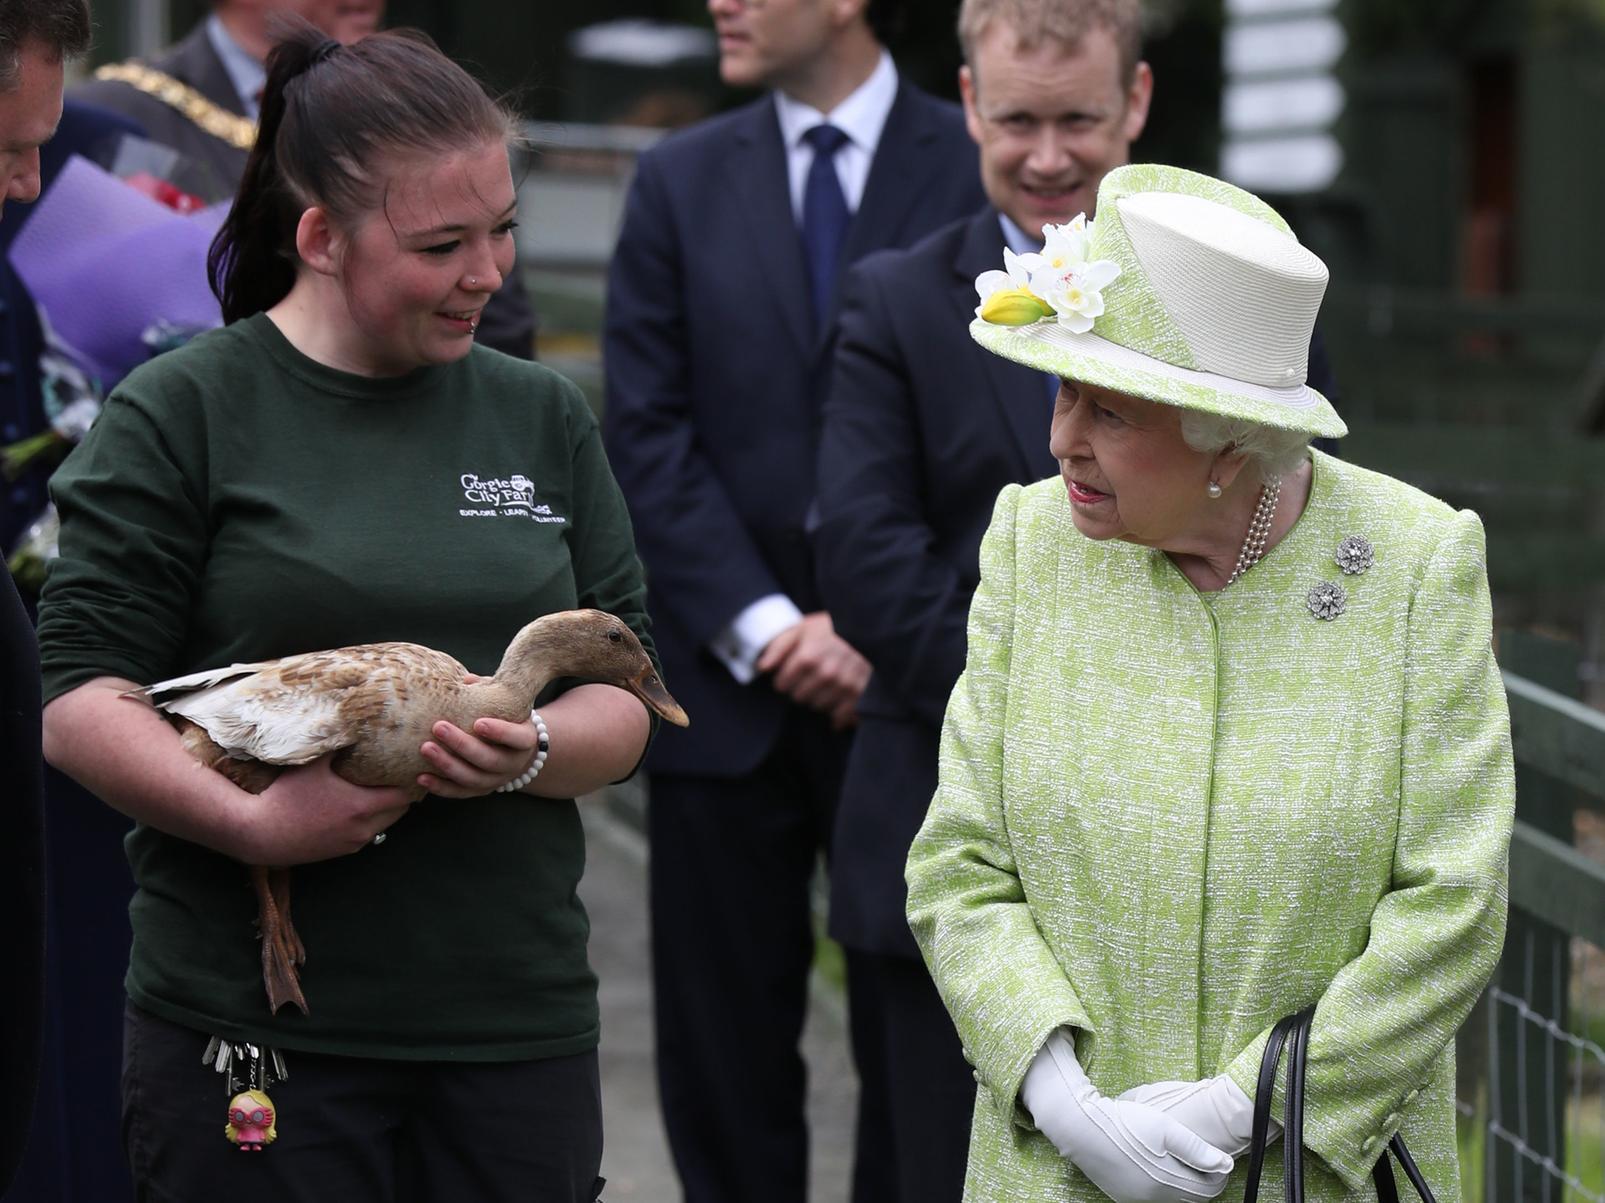 The Queen visits Gorgie Farm and meets a 'michevious' duck.